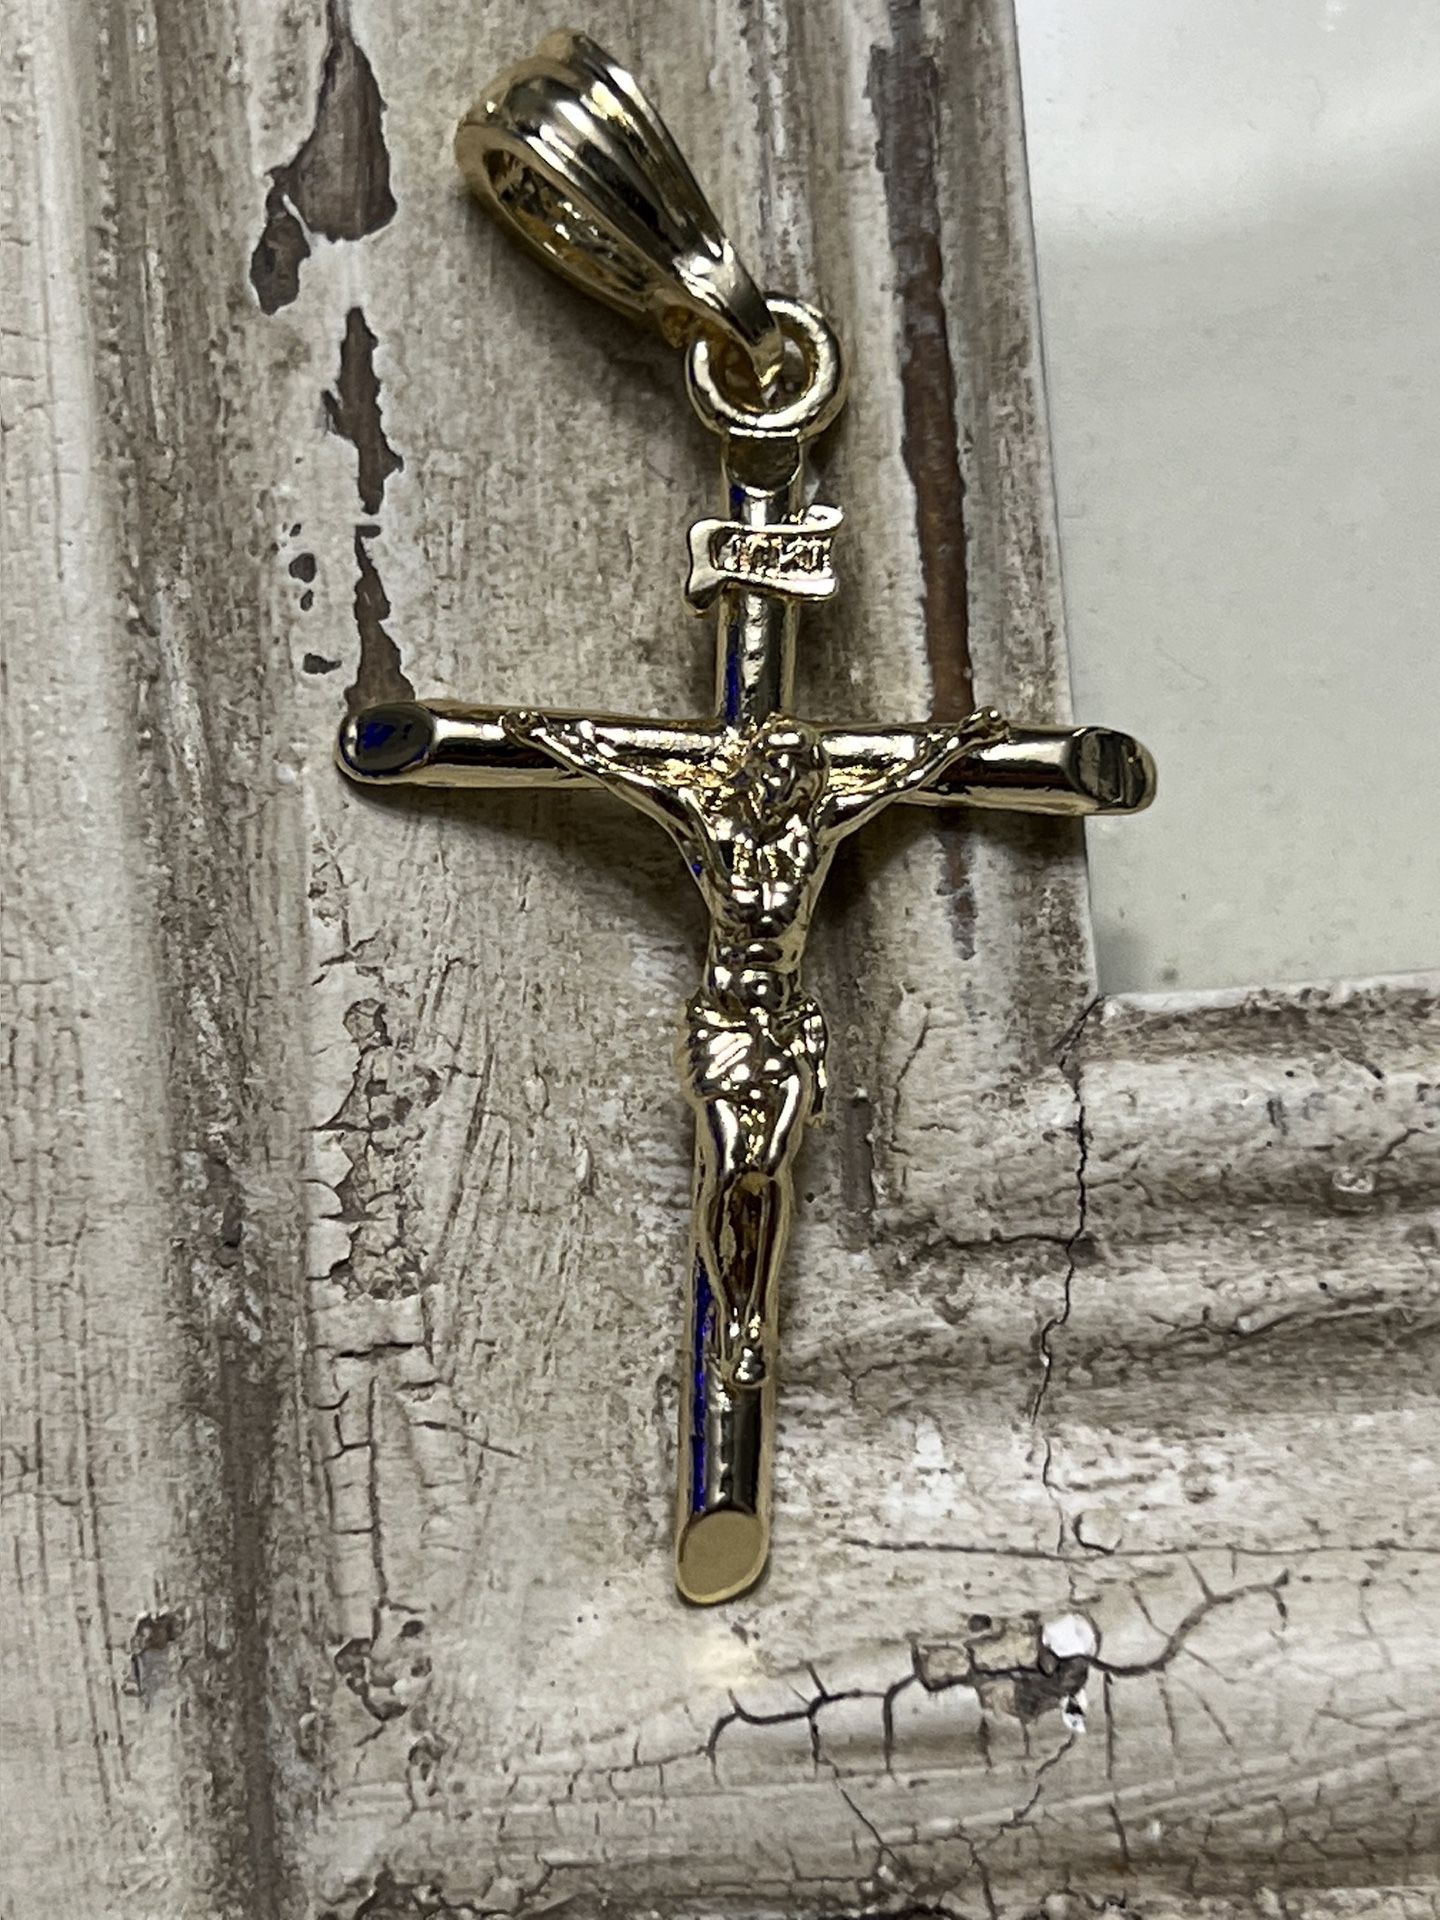 Small Cross Pendant With Jesus